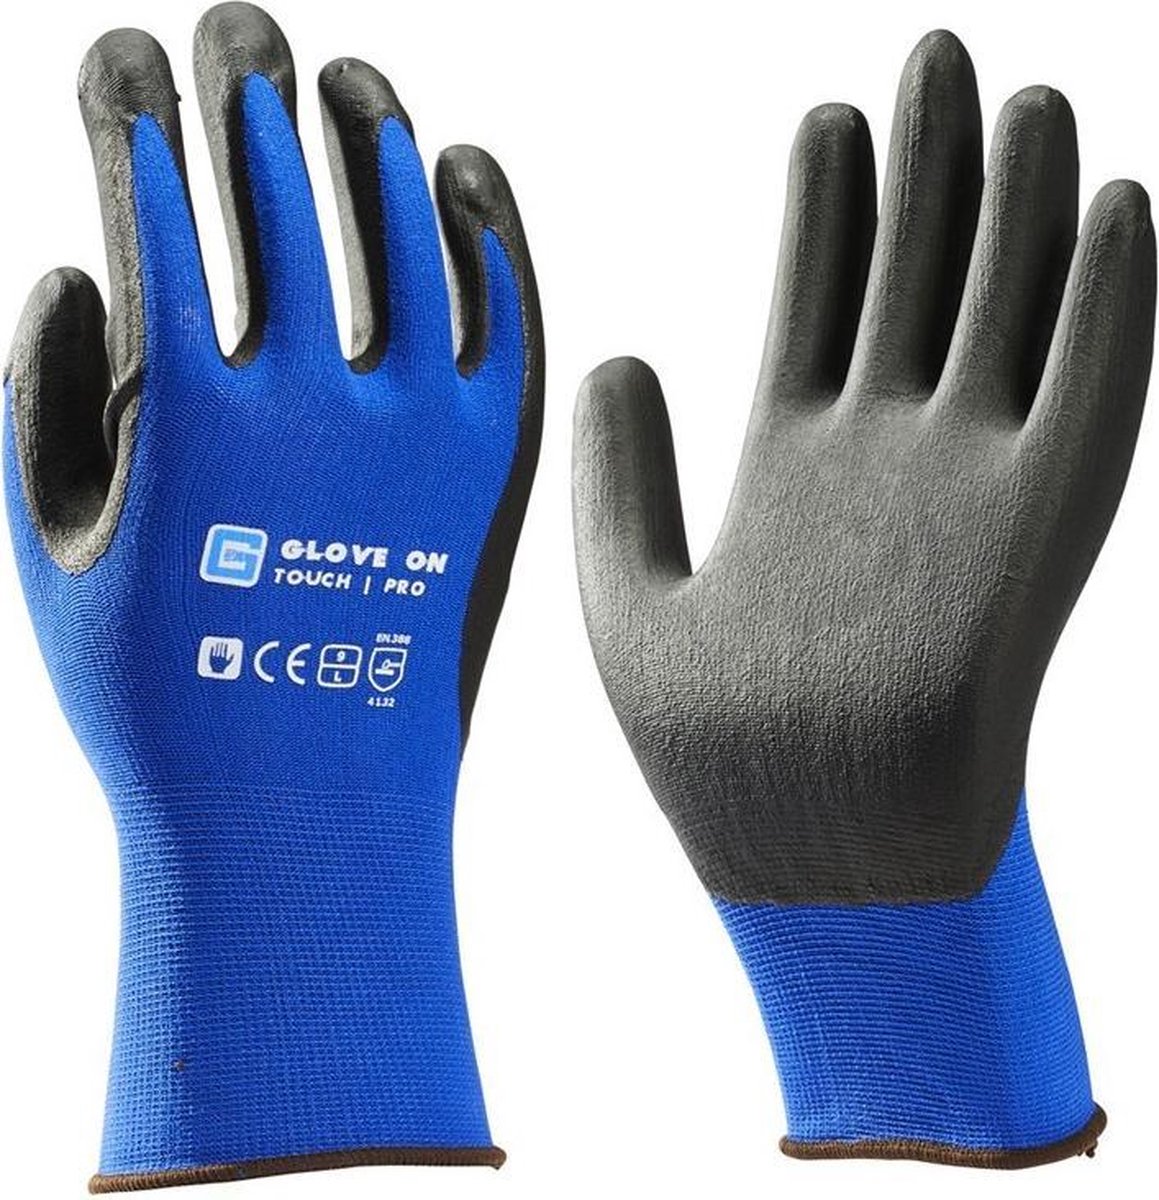 Glove On Touch Pro Blauw Werkhandschoenen - Maat S - Nitril Handschoenen |  bol